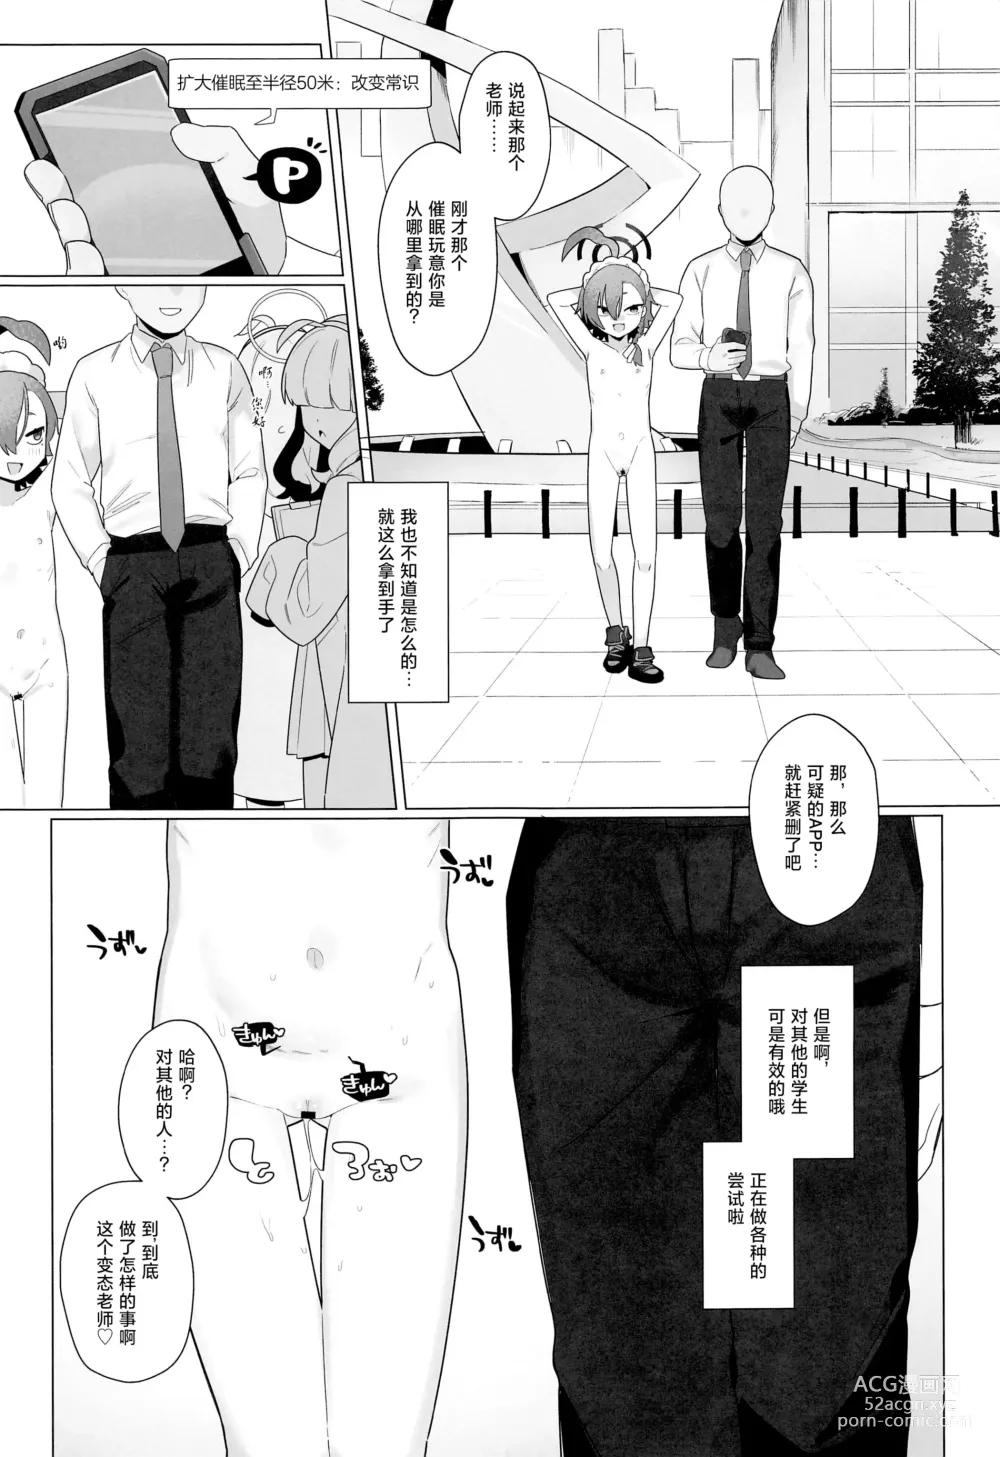 Page 7 of doujinshi 碧蓝档案催眠部4